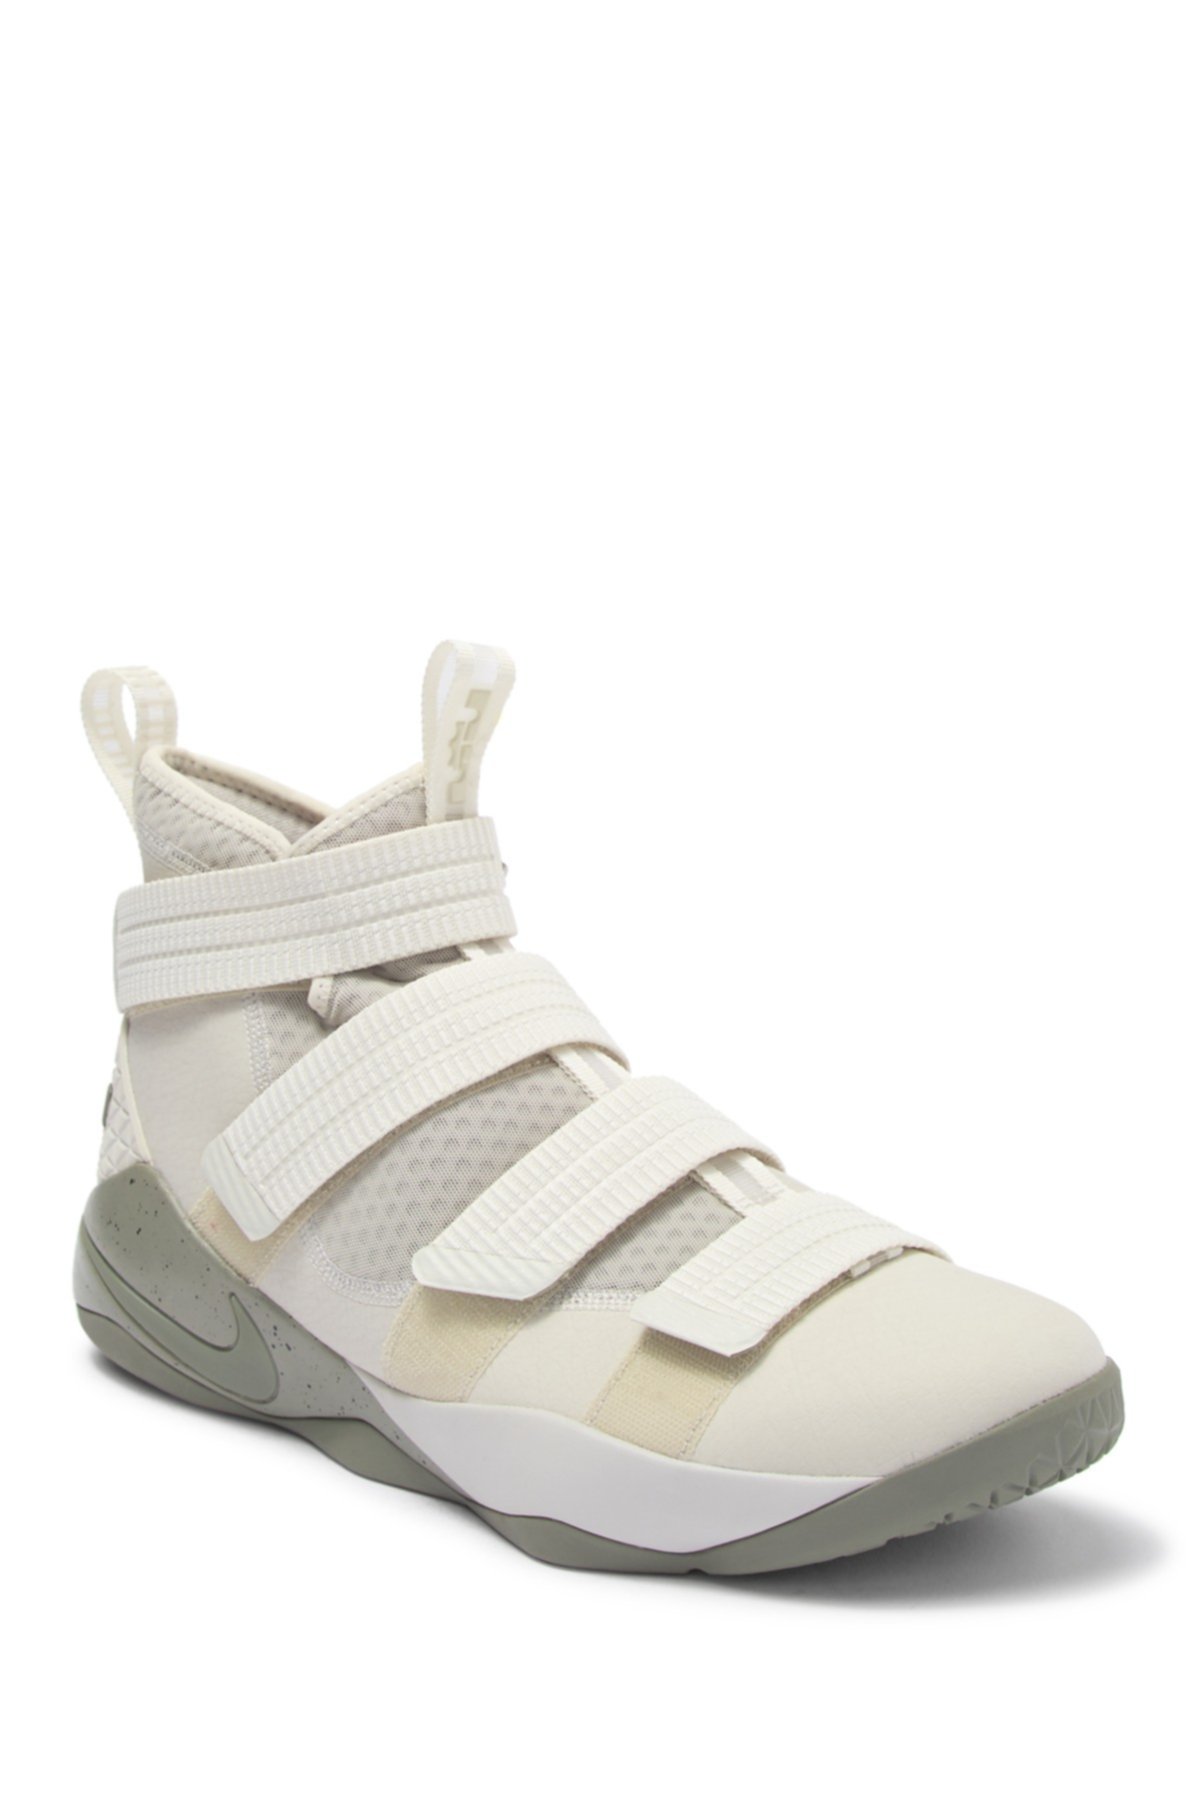 Lebron Soldier XI SFG Баскетбольная обувь Nike